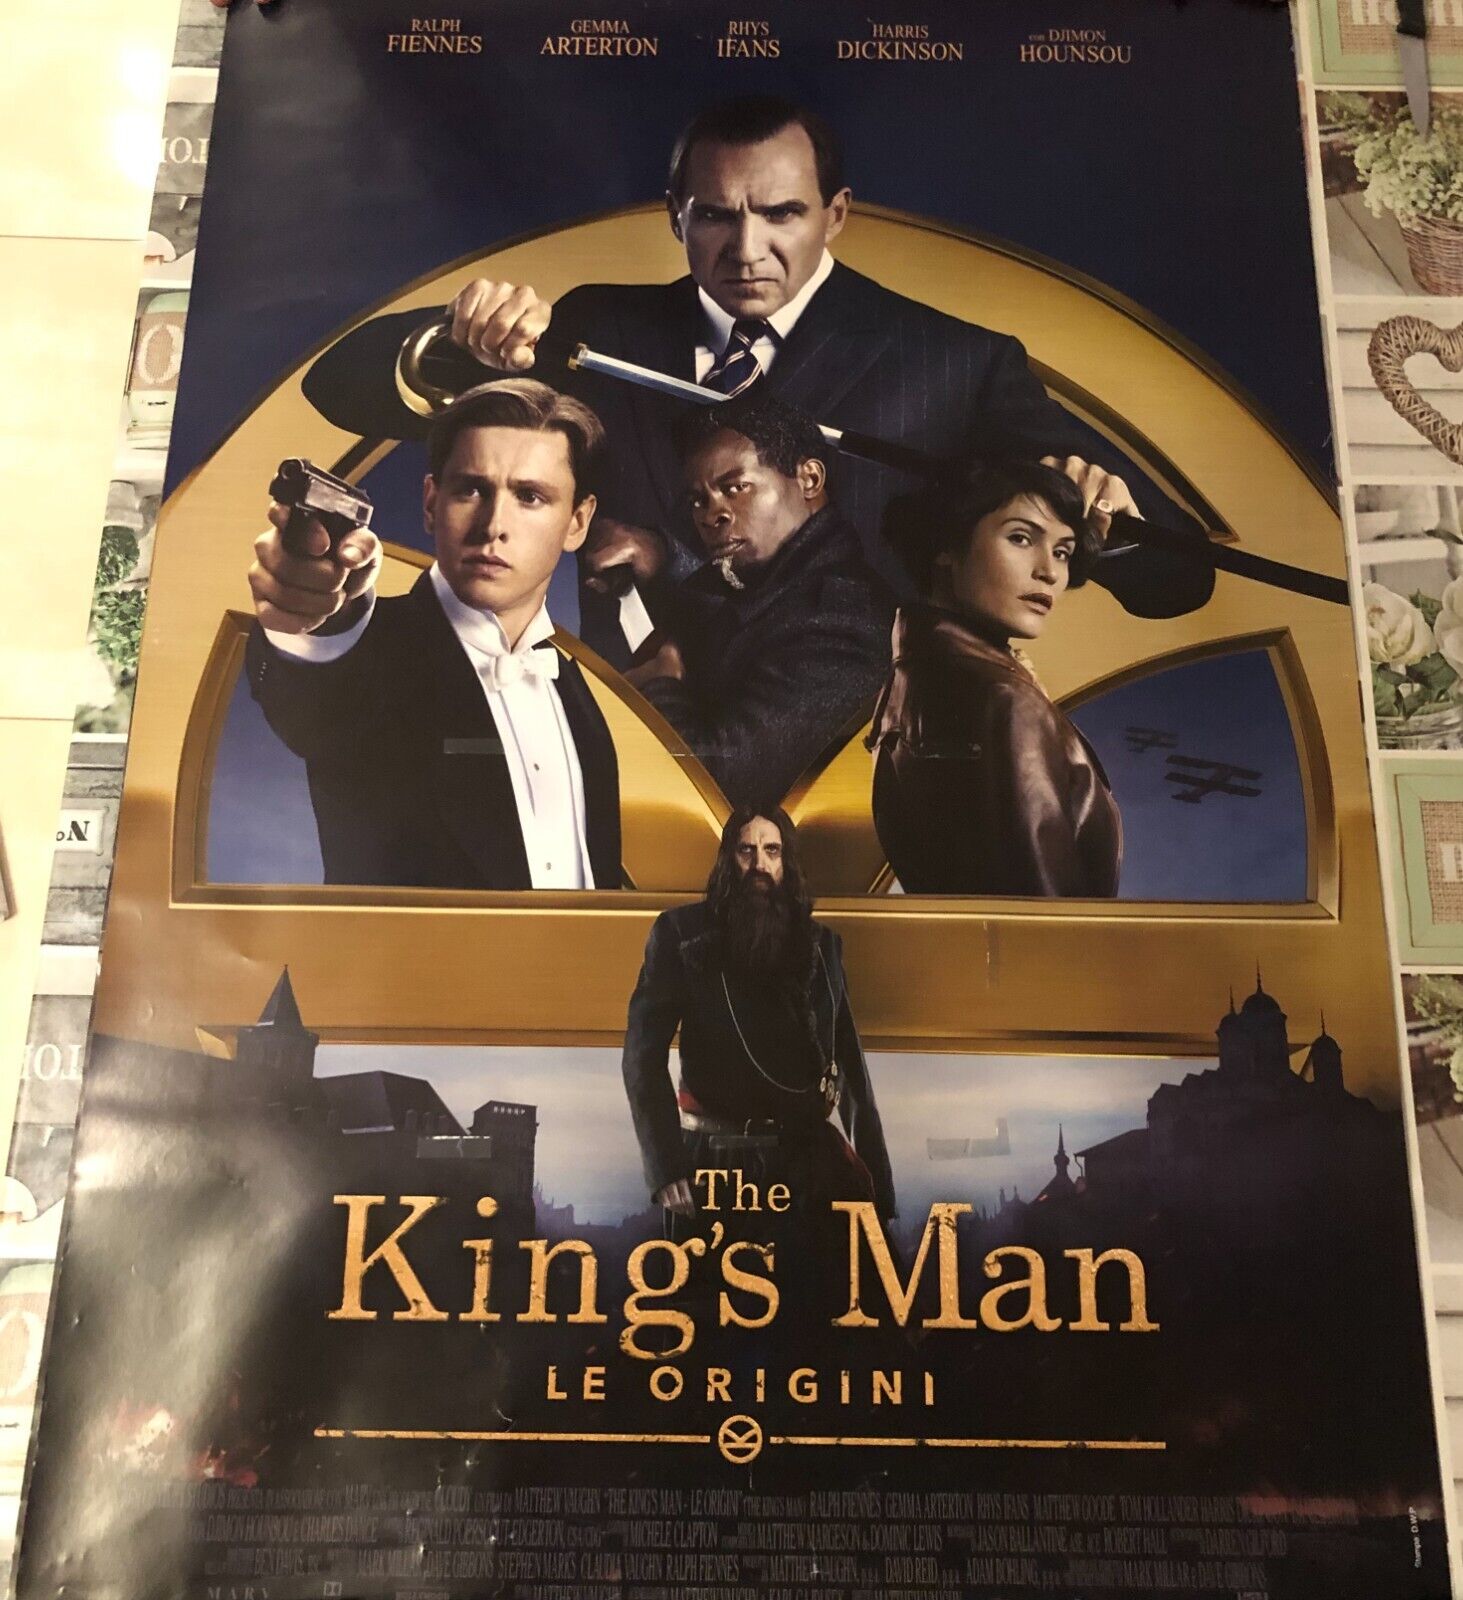 Poster locandina The King?s man Le origini 100x70 cm ORIGINALE da cinema 2021  d